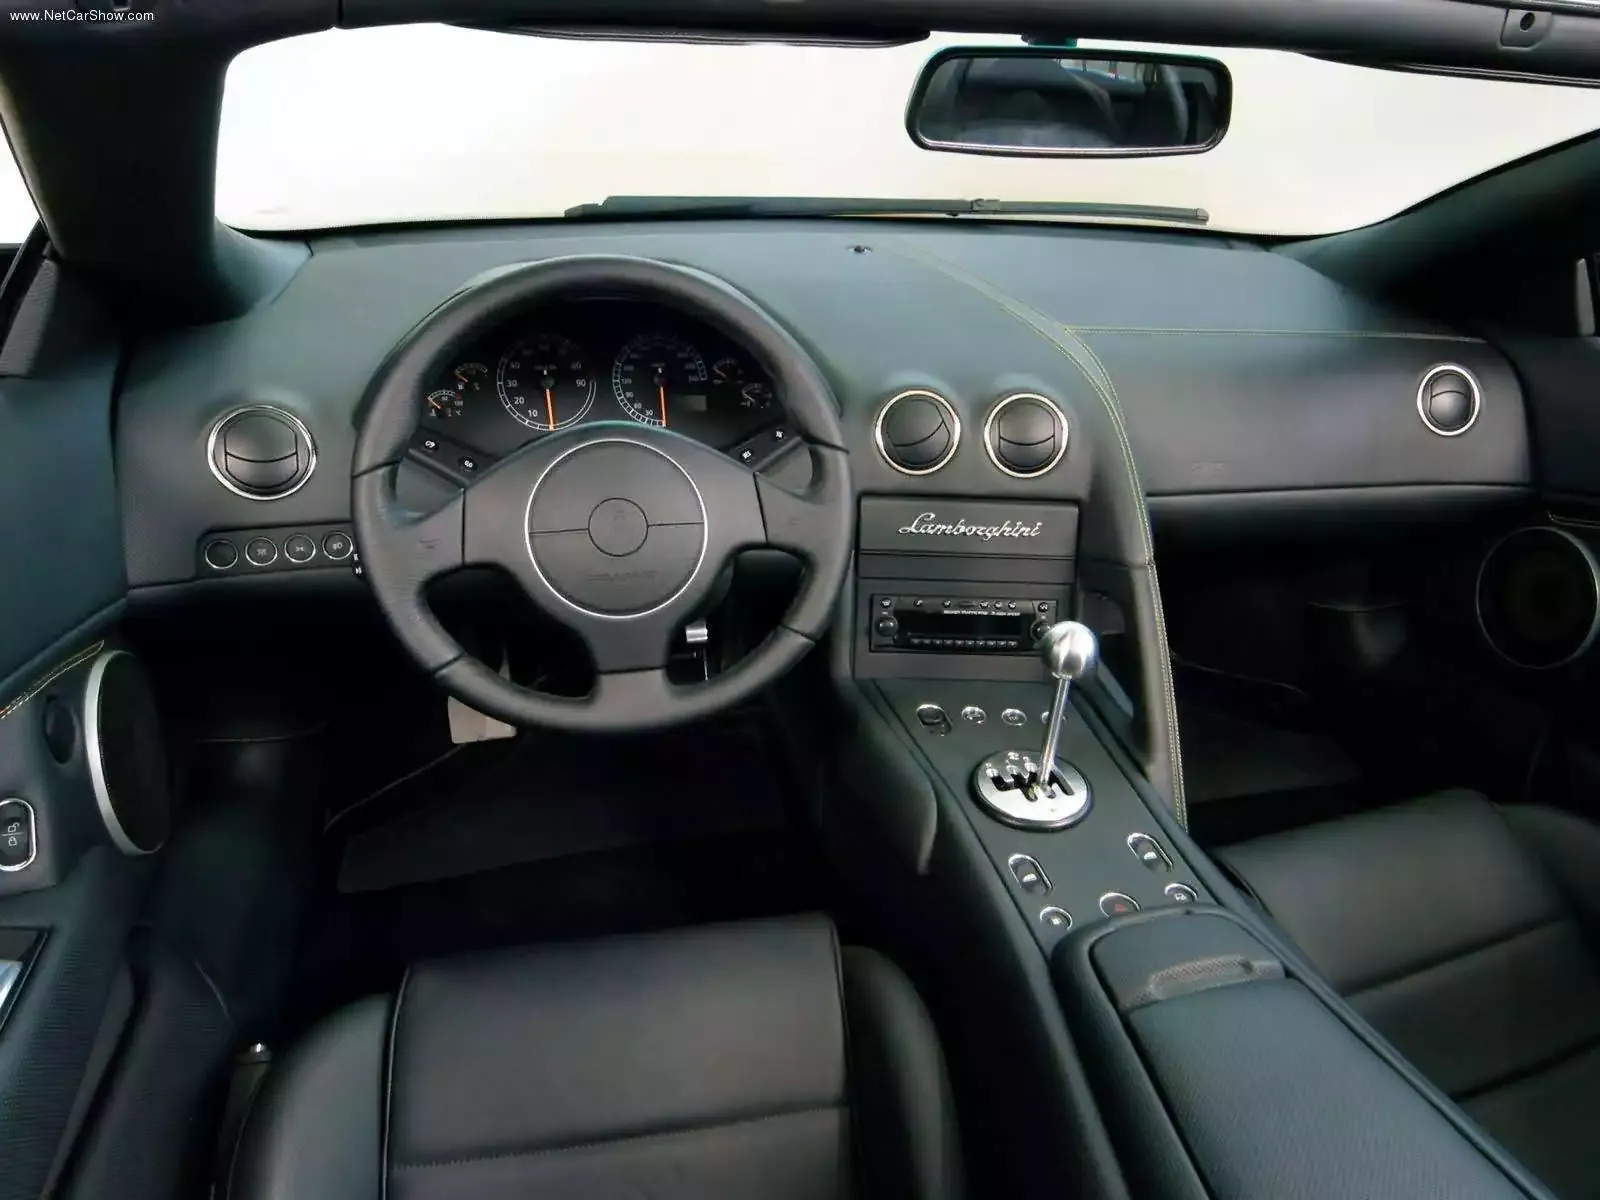 Hình ảnh siêu xe Lamborghini Murcielago Roadster 2004 & nội ngoại thất